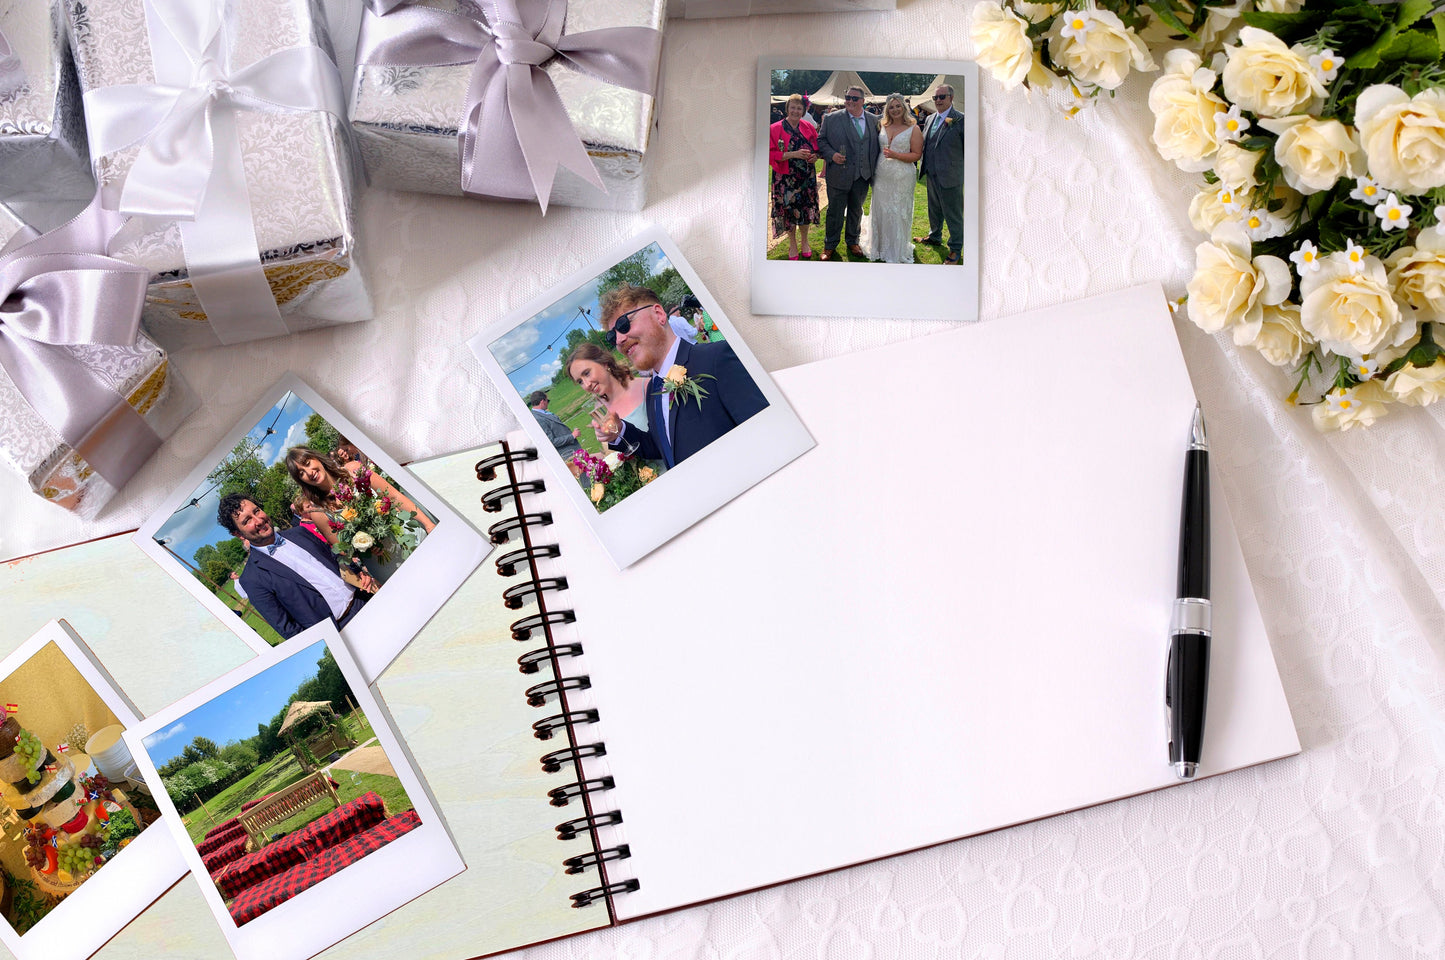 Personalised Engraved Wooden Wedding Guest Book with Peonies, Wedding Photo Book, Wedding Photo Album, Wedding Gift, - Resplendent Aurora